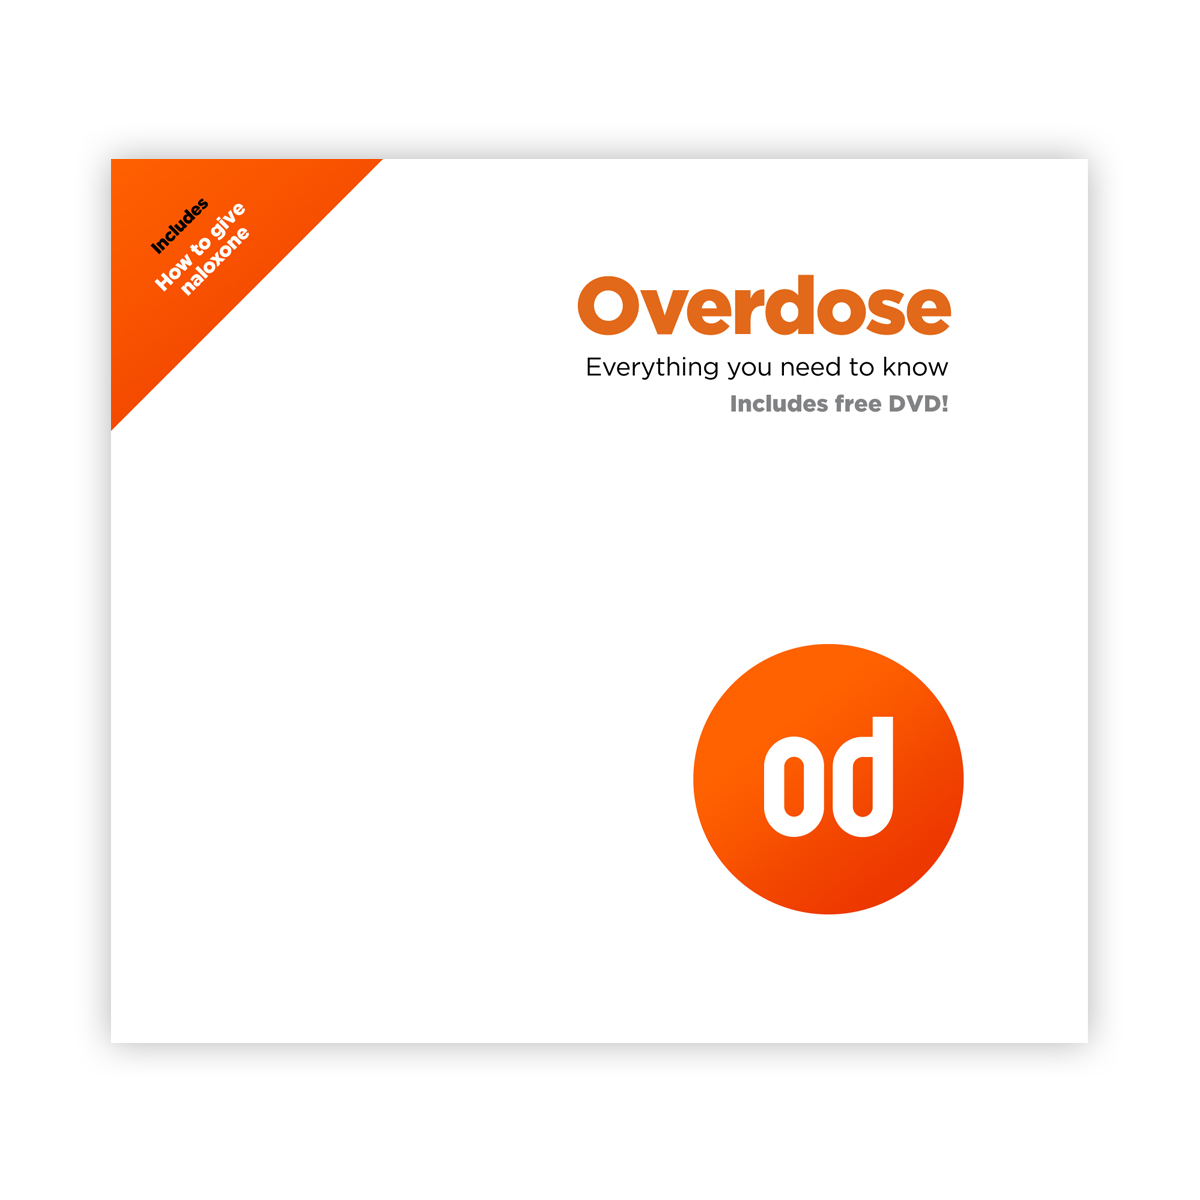 Overdose DVD / booklet